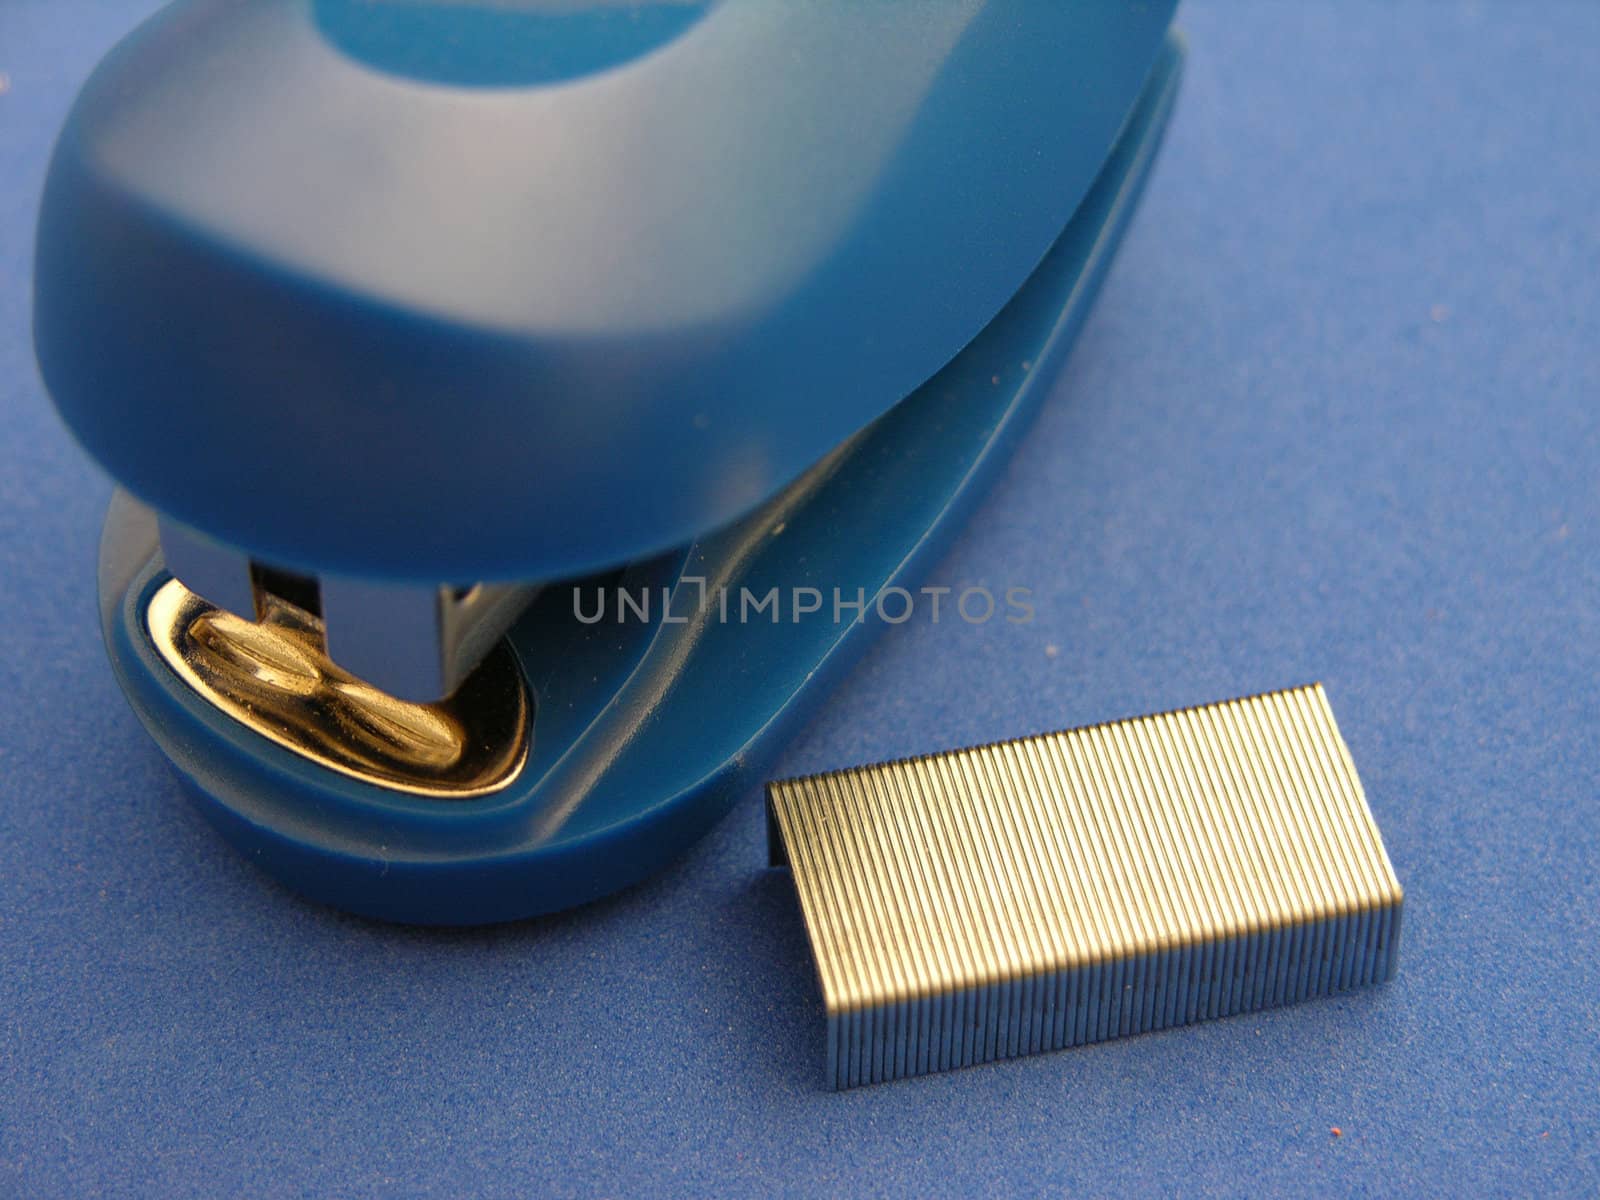           A blue stapler on a blue background